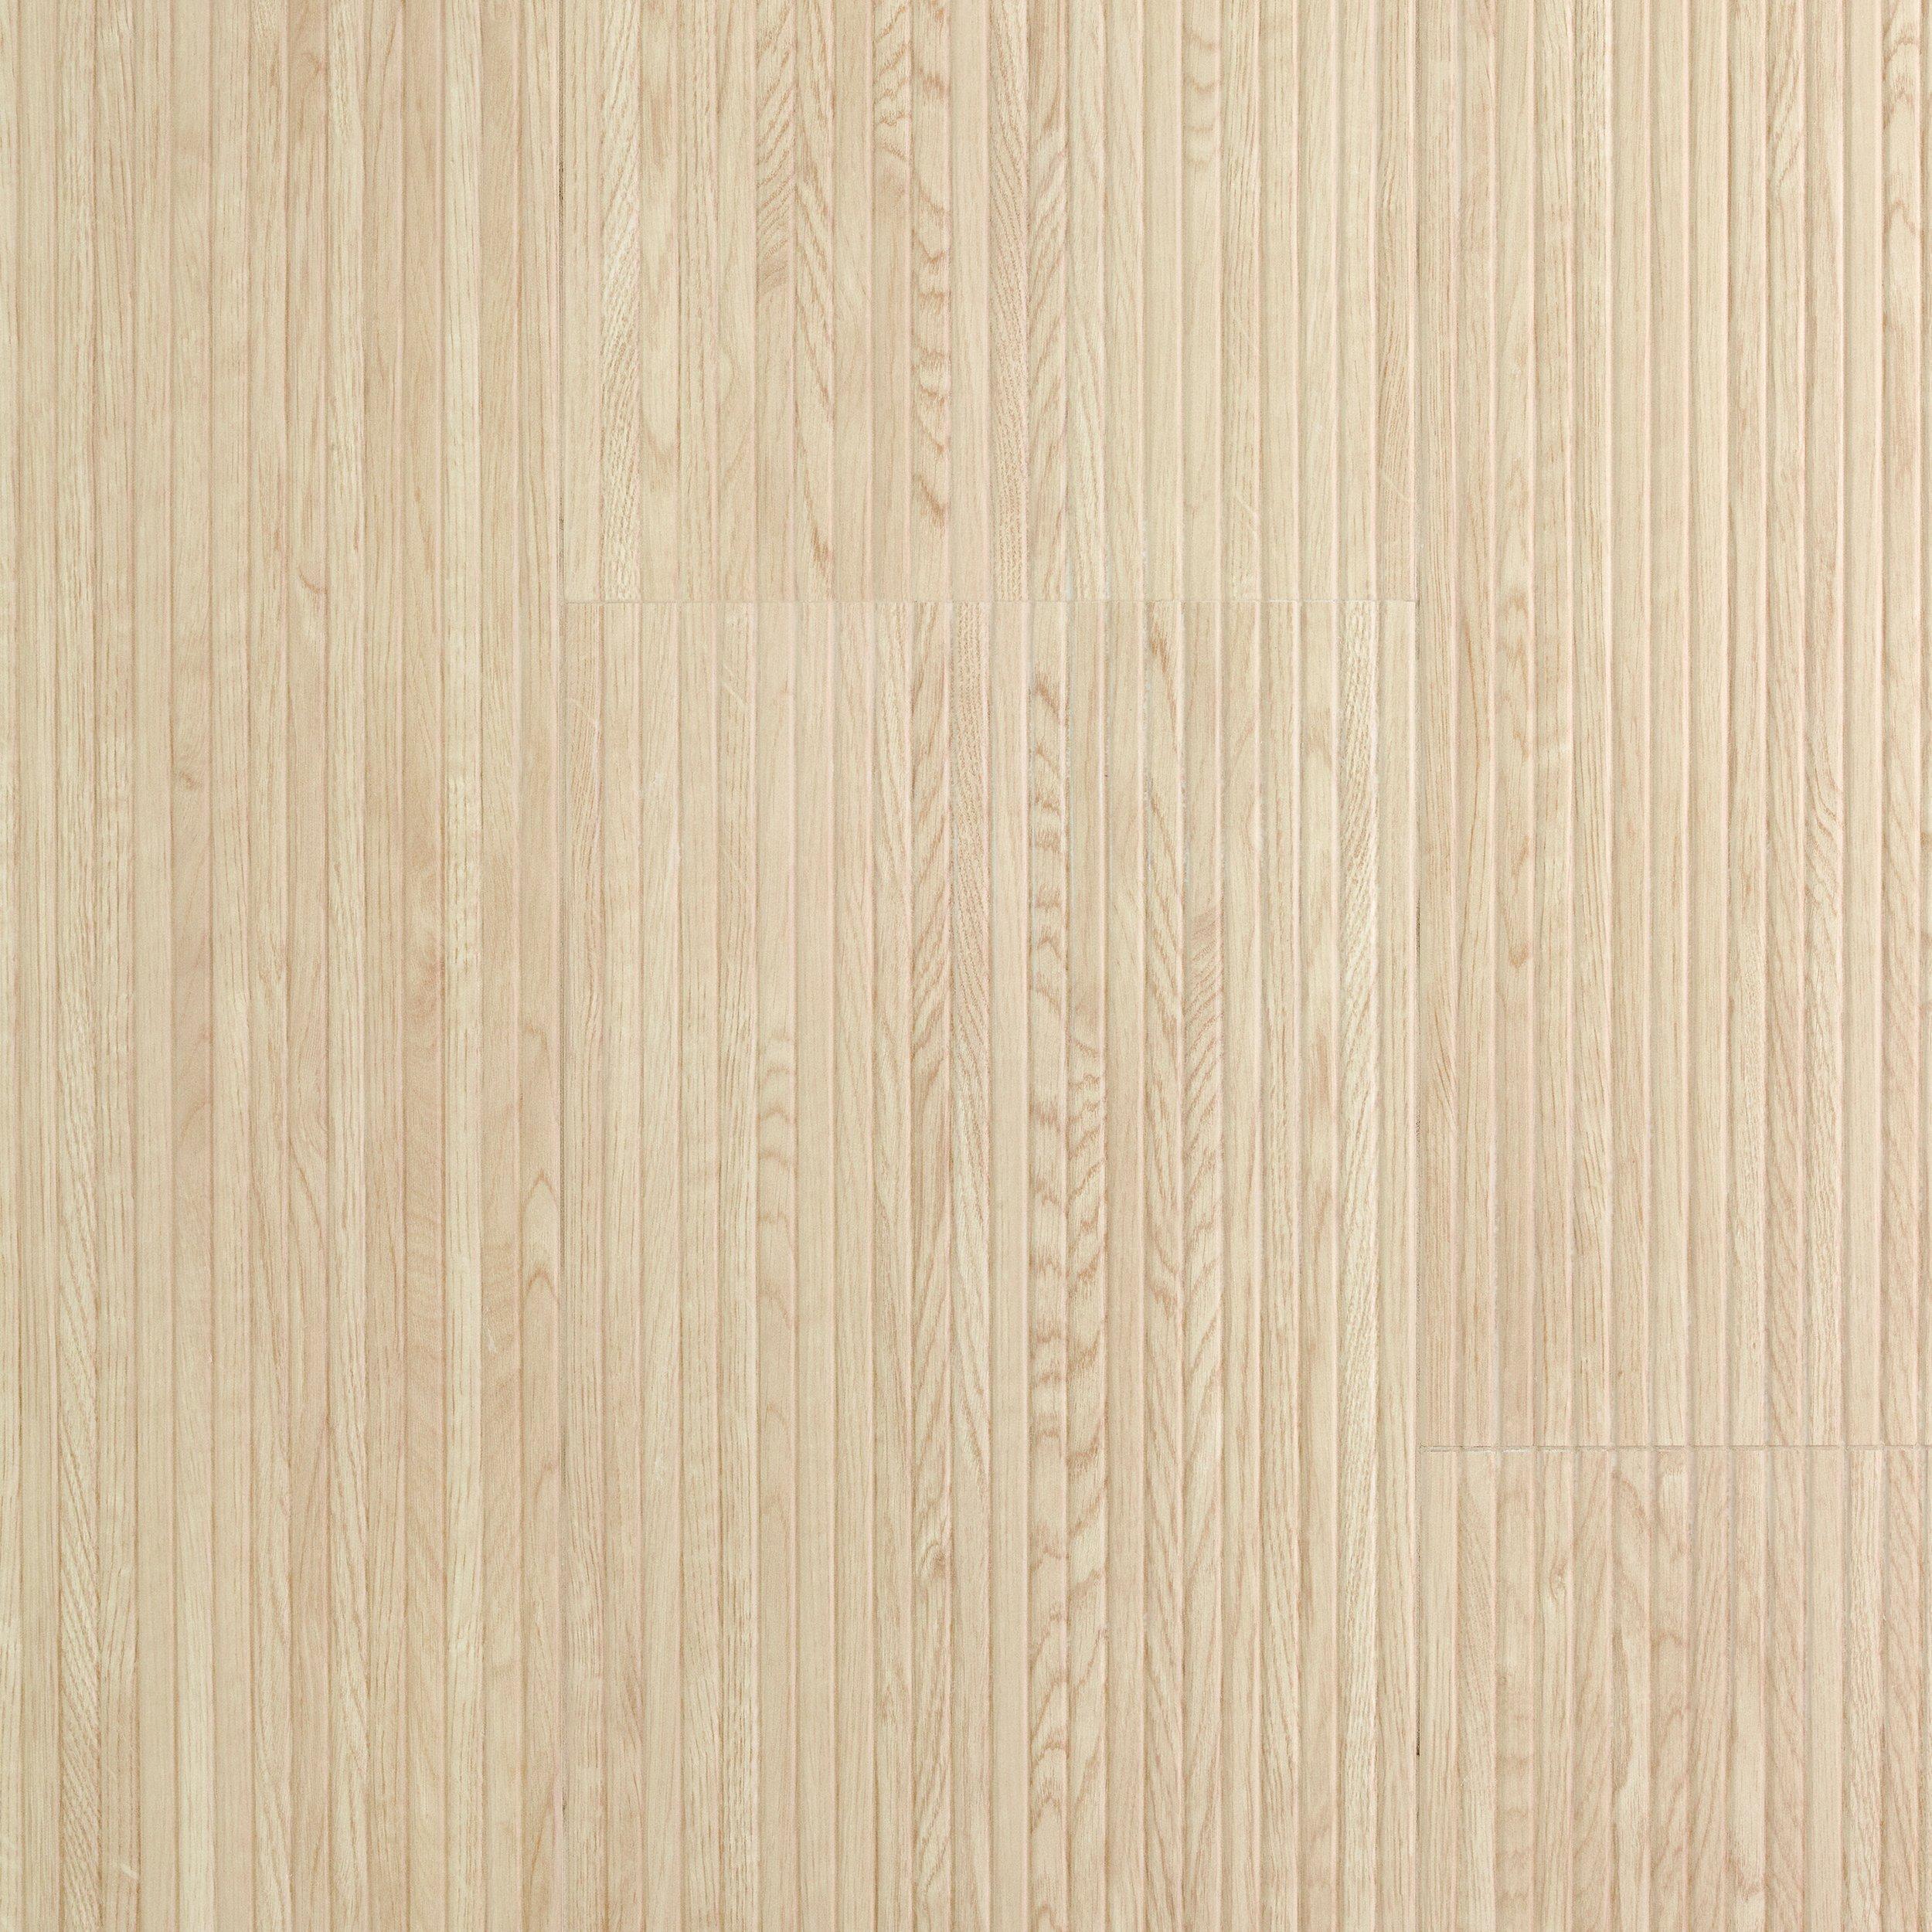 Ribbon Maple Wall Tile